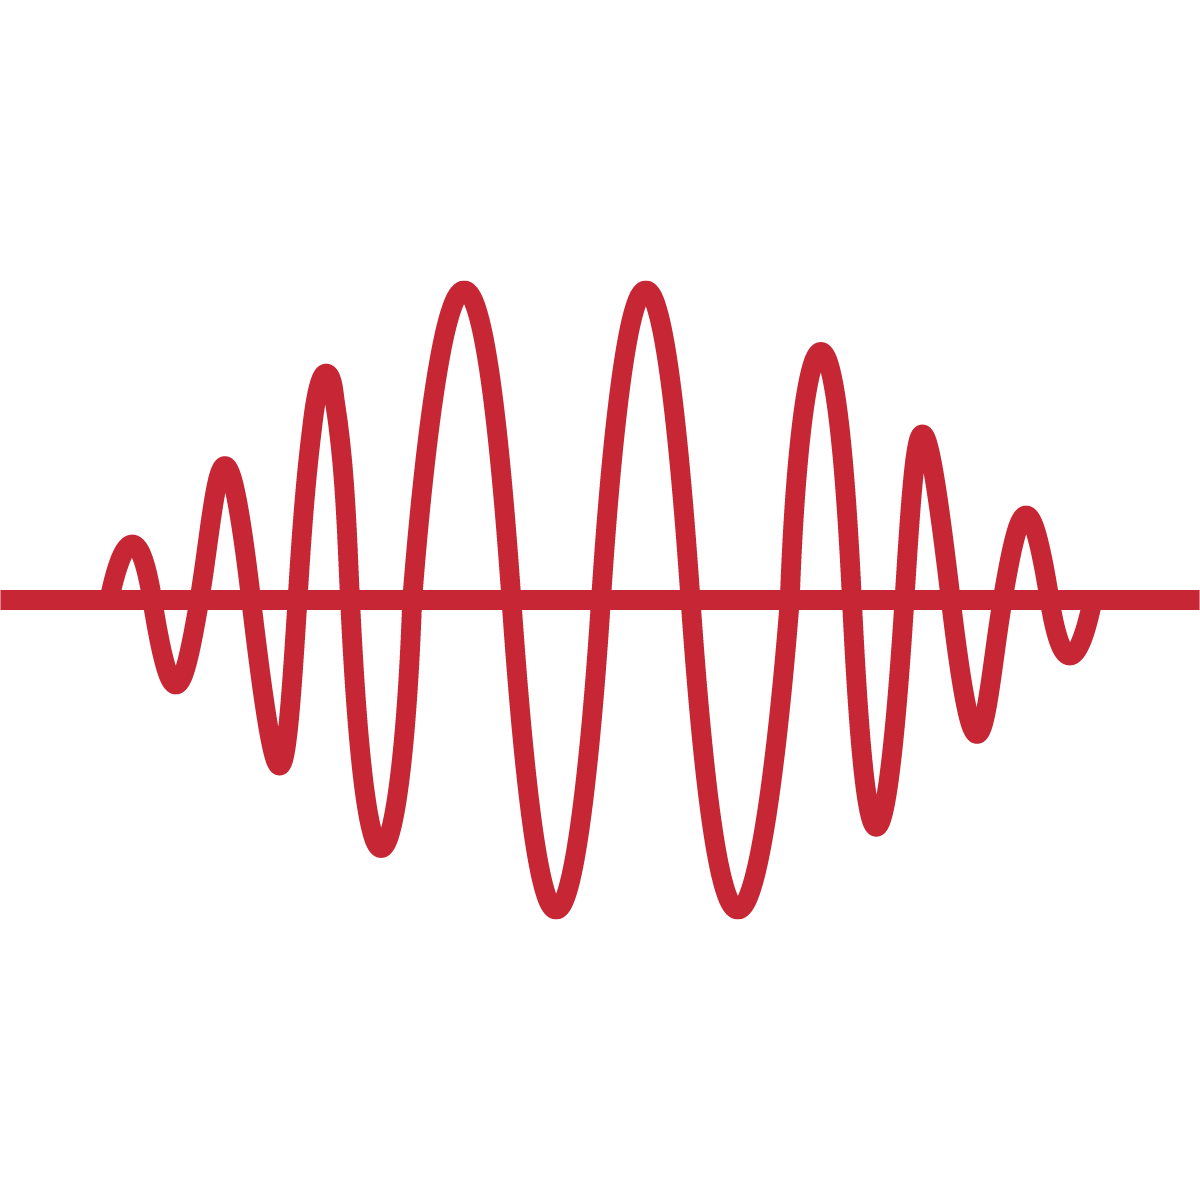 Red sine wave pattern on a black background.